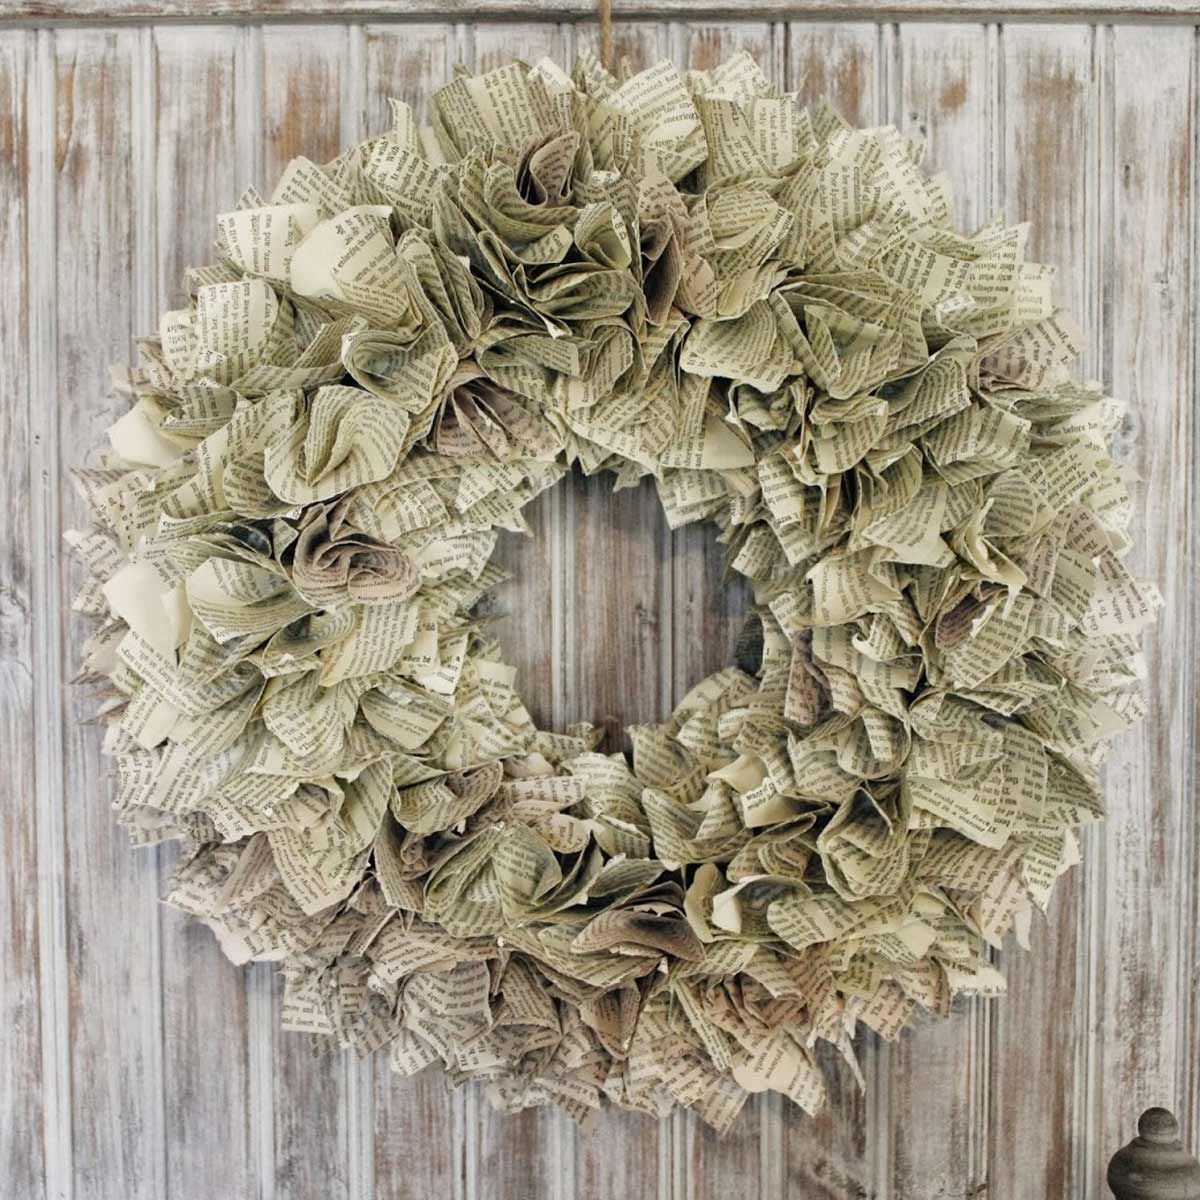 Wreath repurposed from old books.jpg